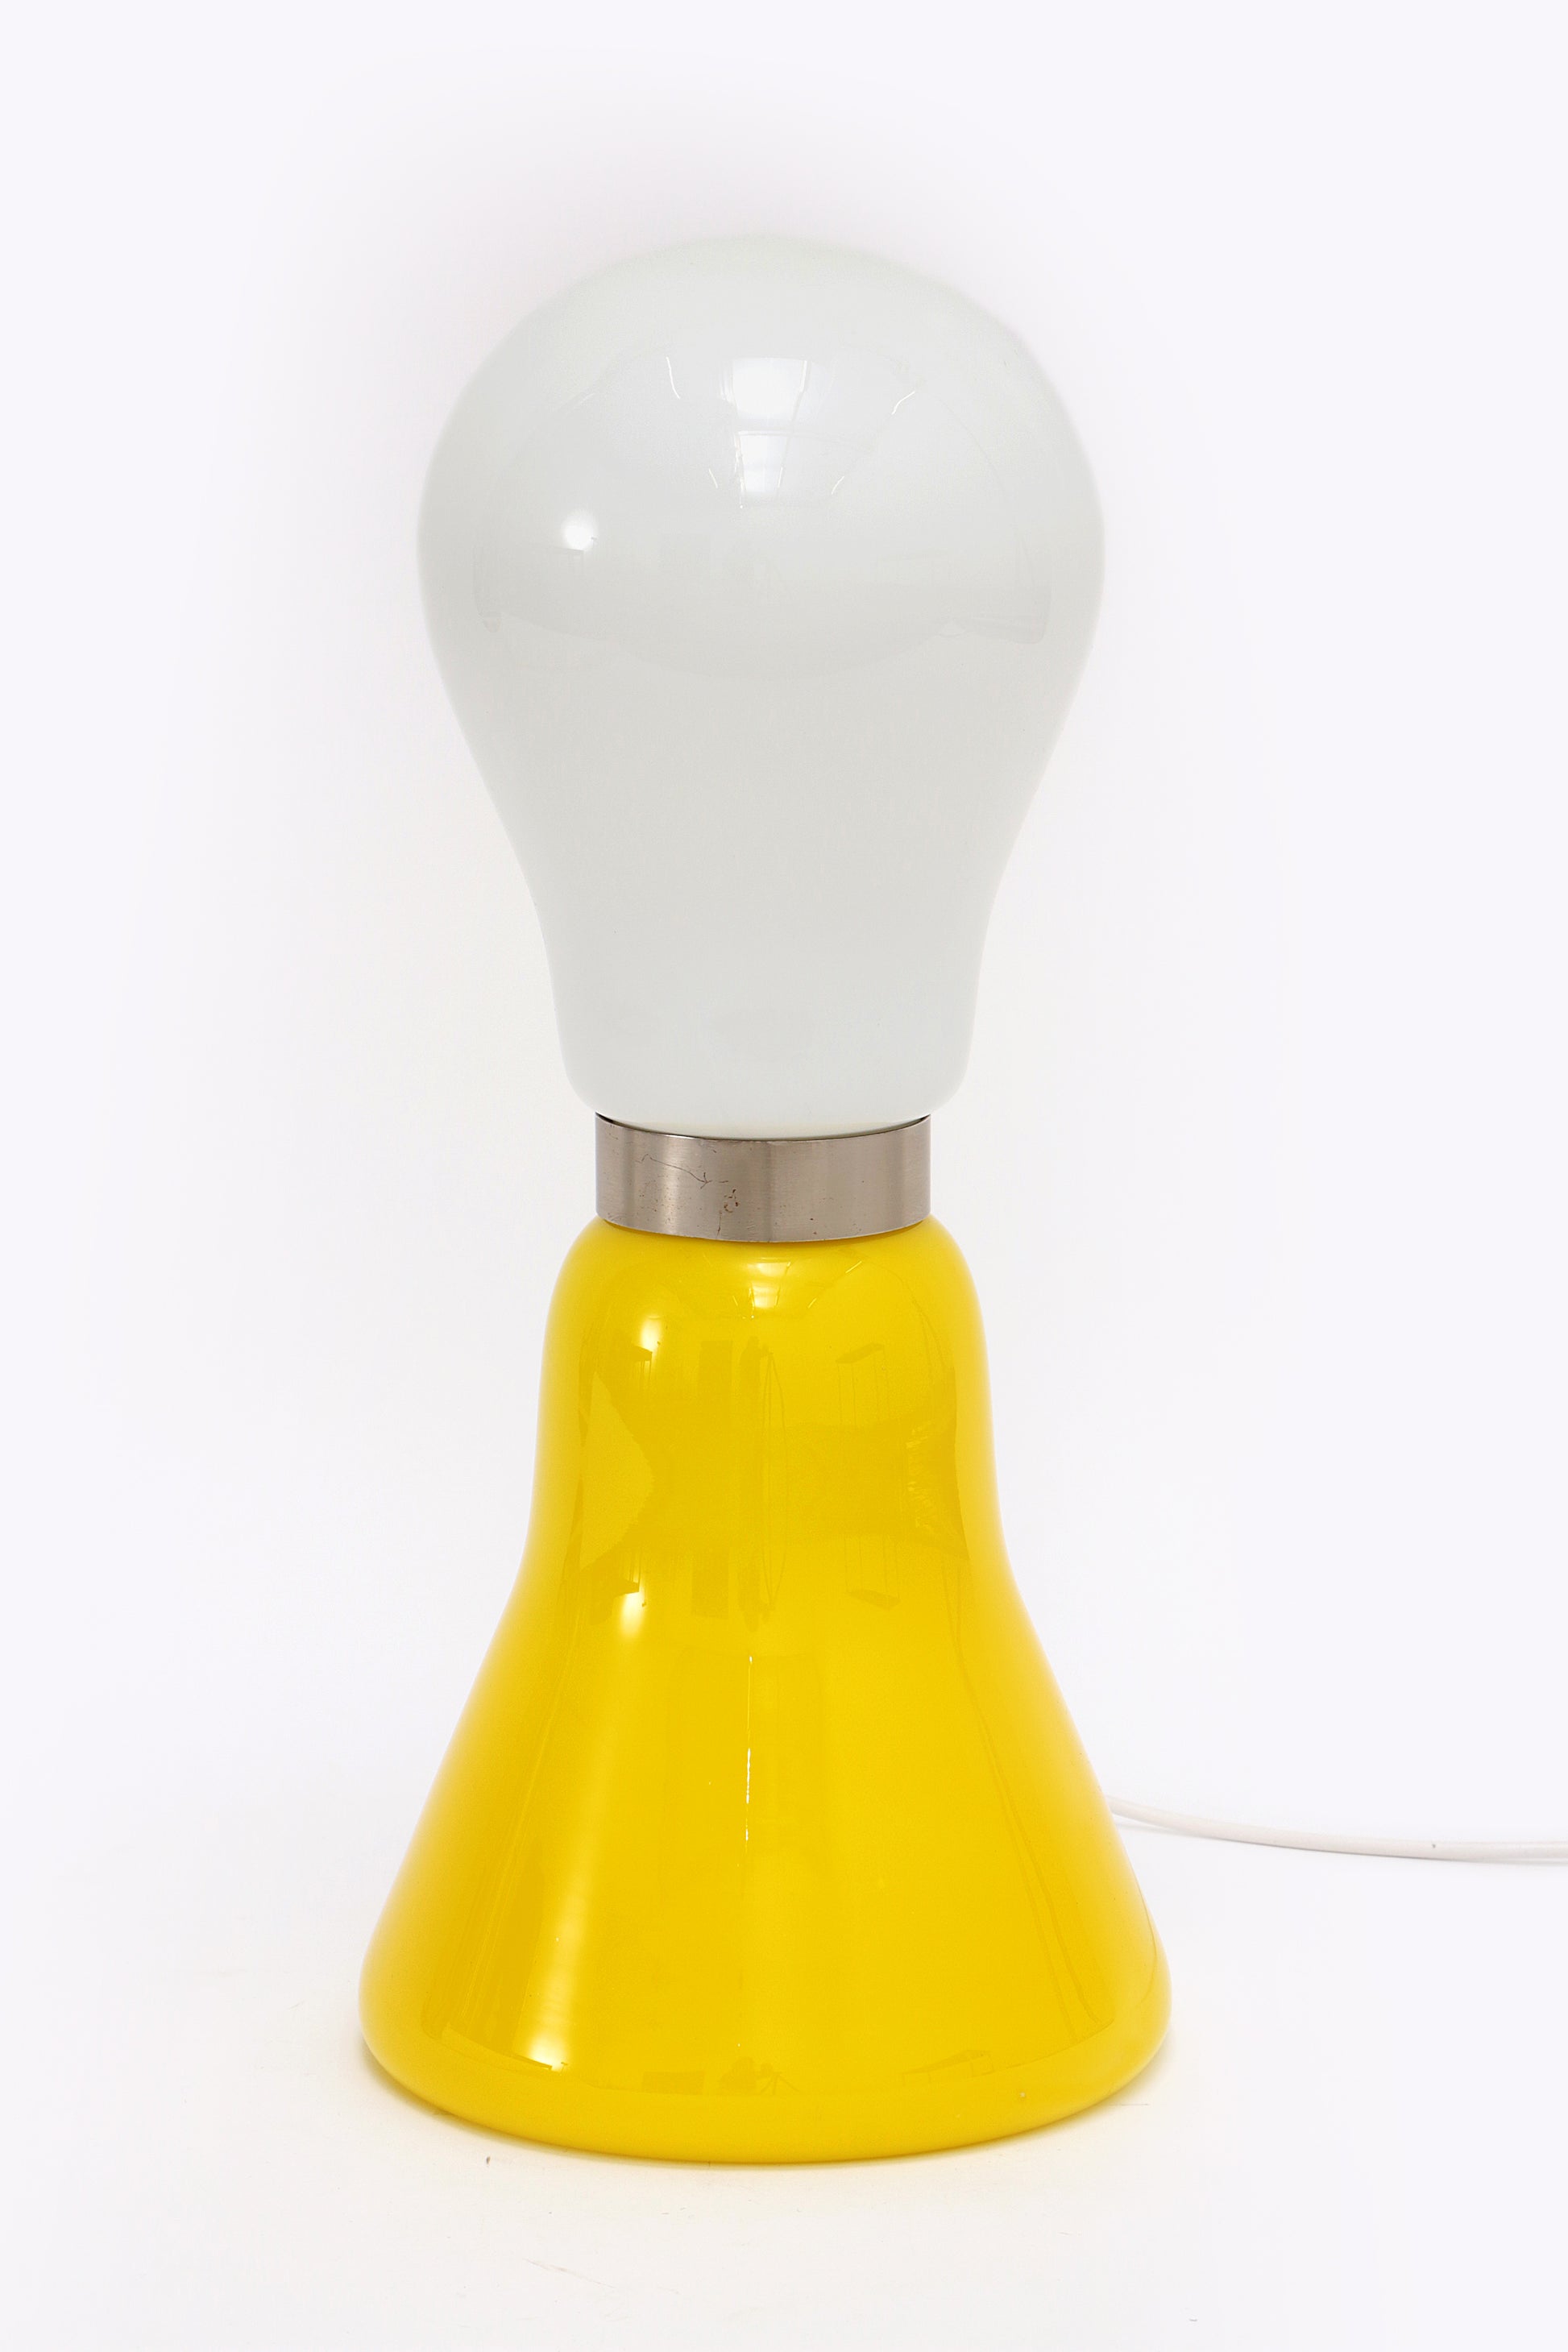 Murano Mazzega Table Lamp by Carlo Nason,1960's.